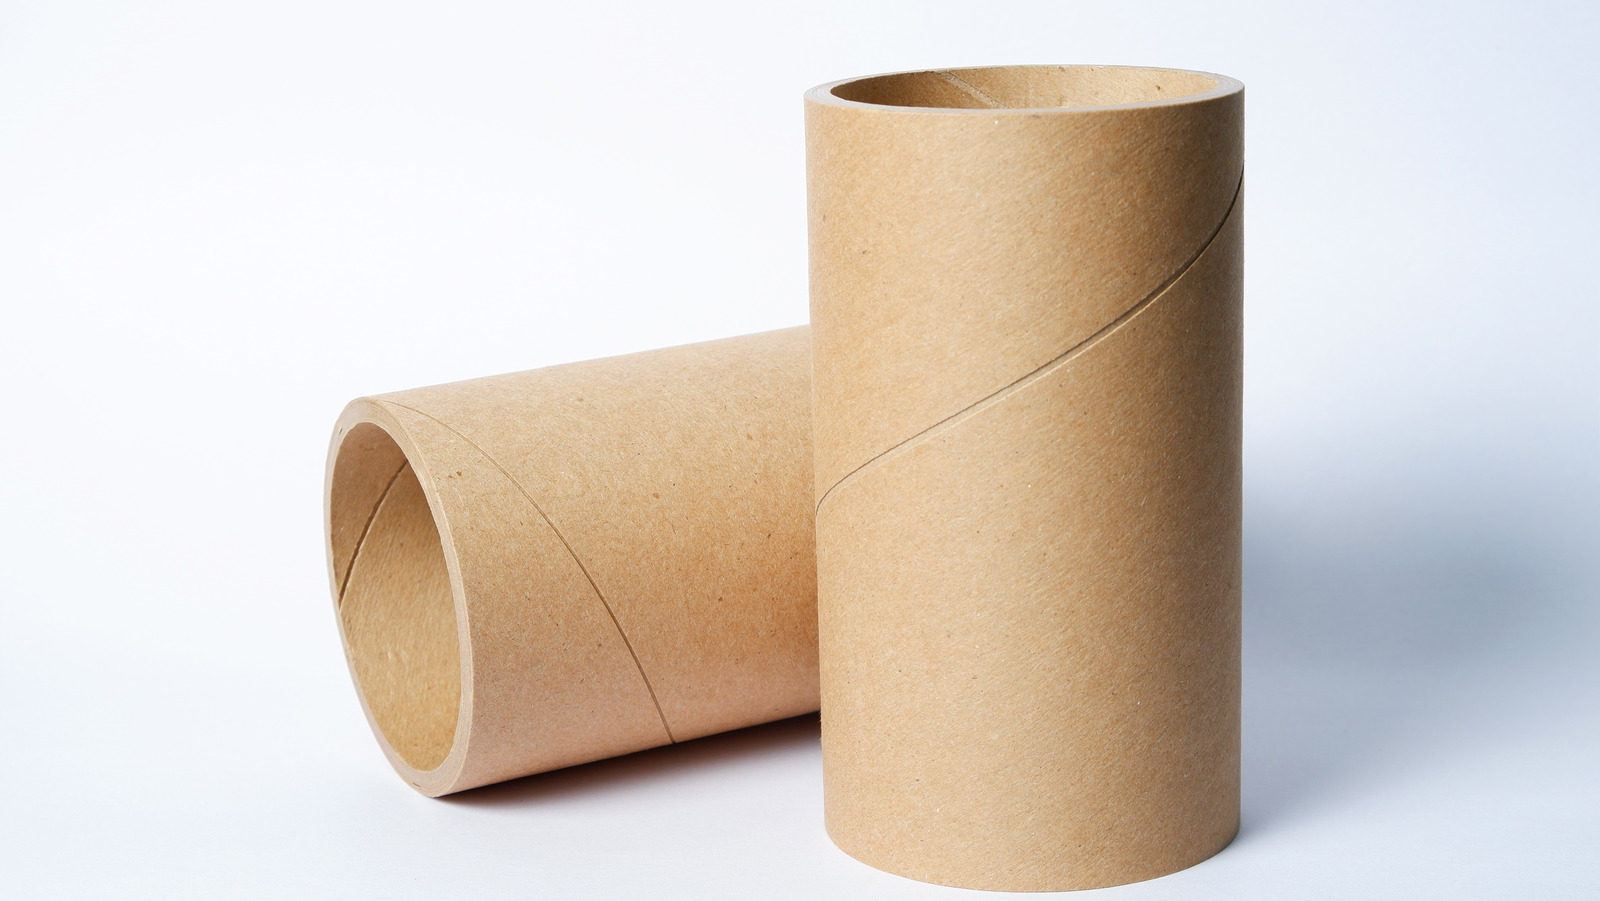 6 Ways to Reuse Toilet Paper Tubes